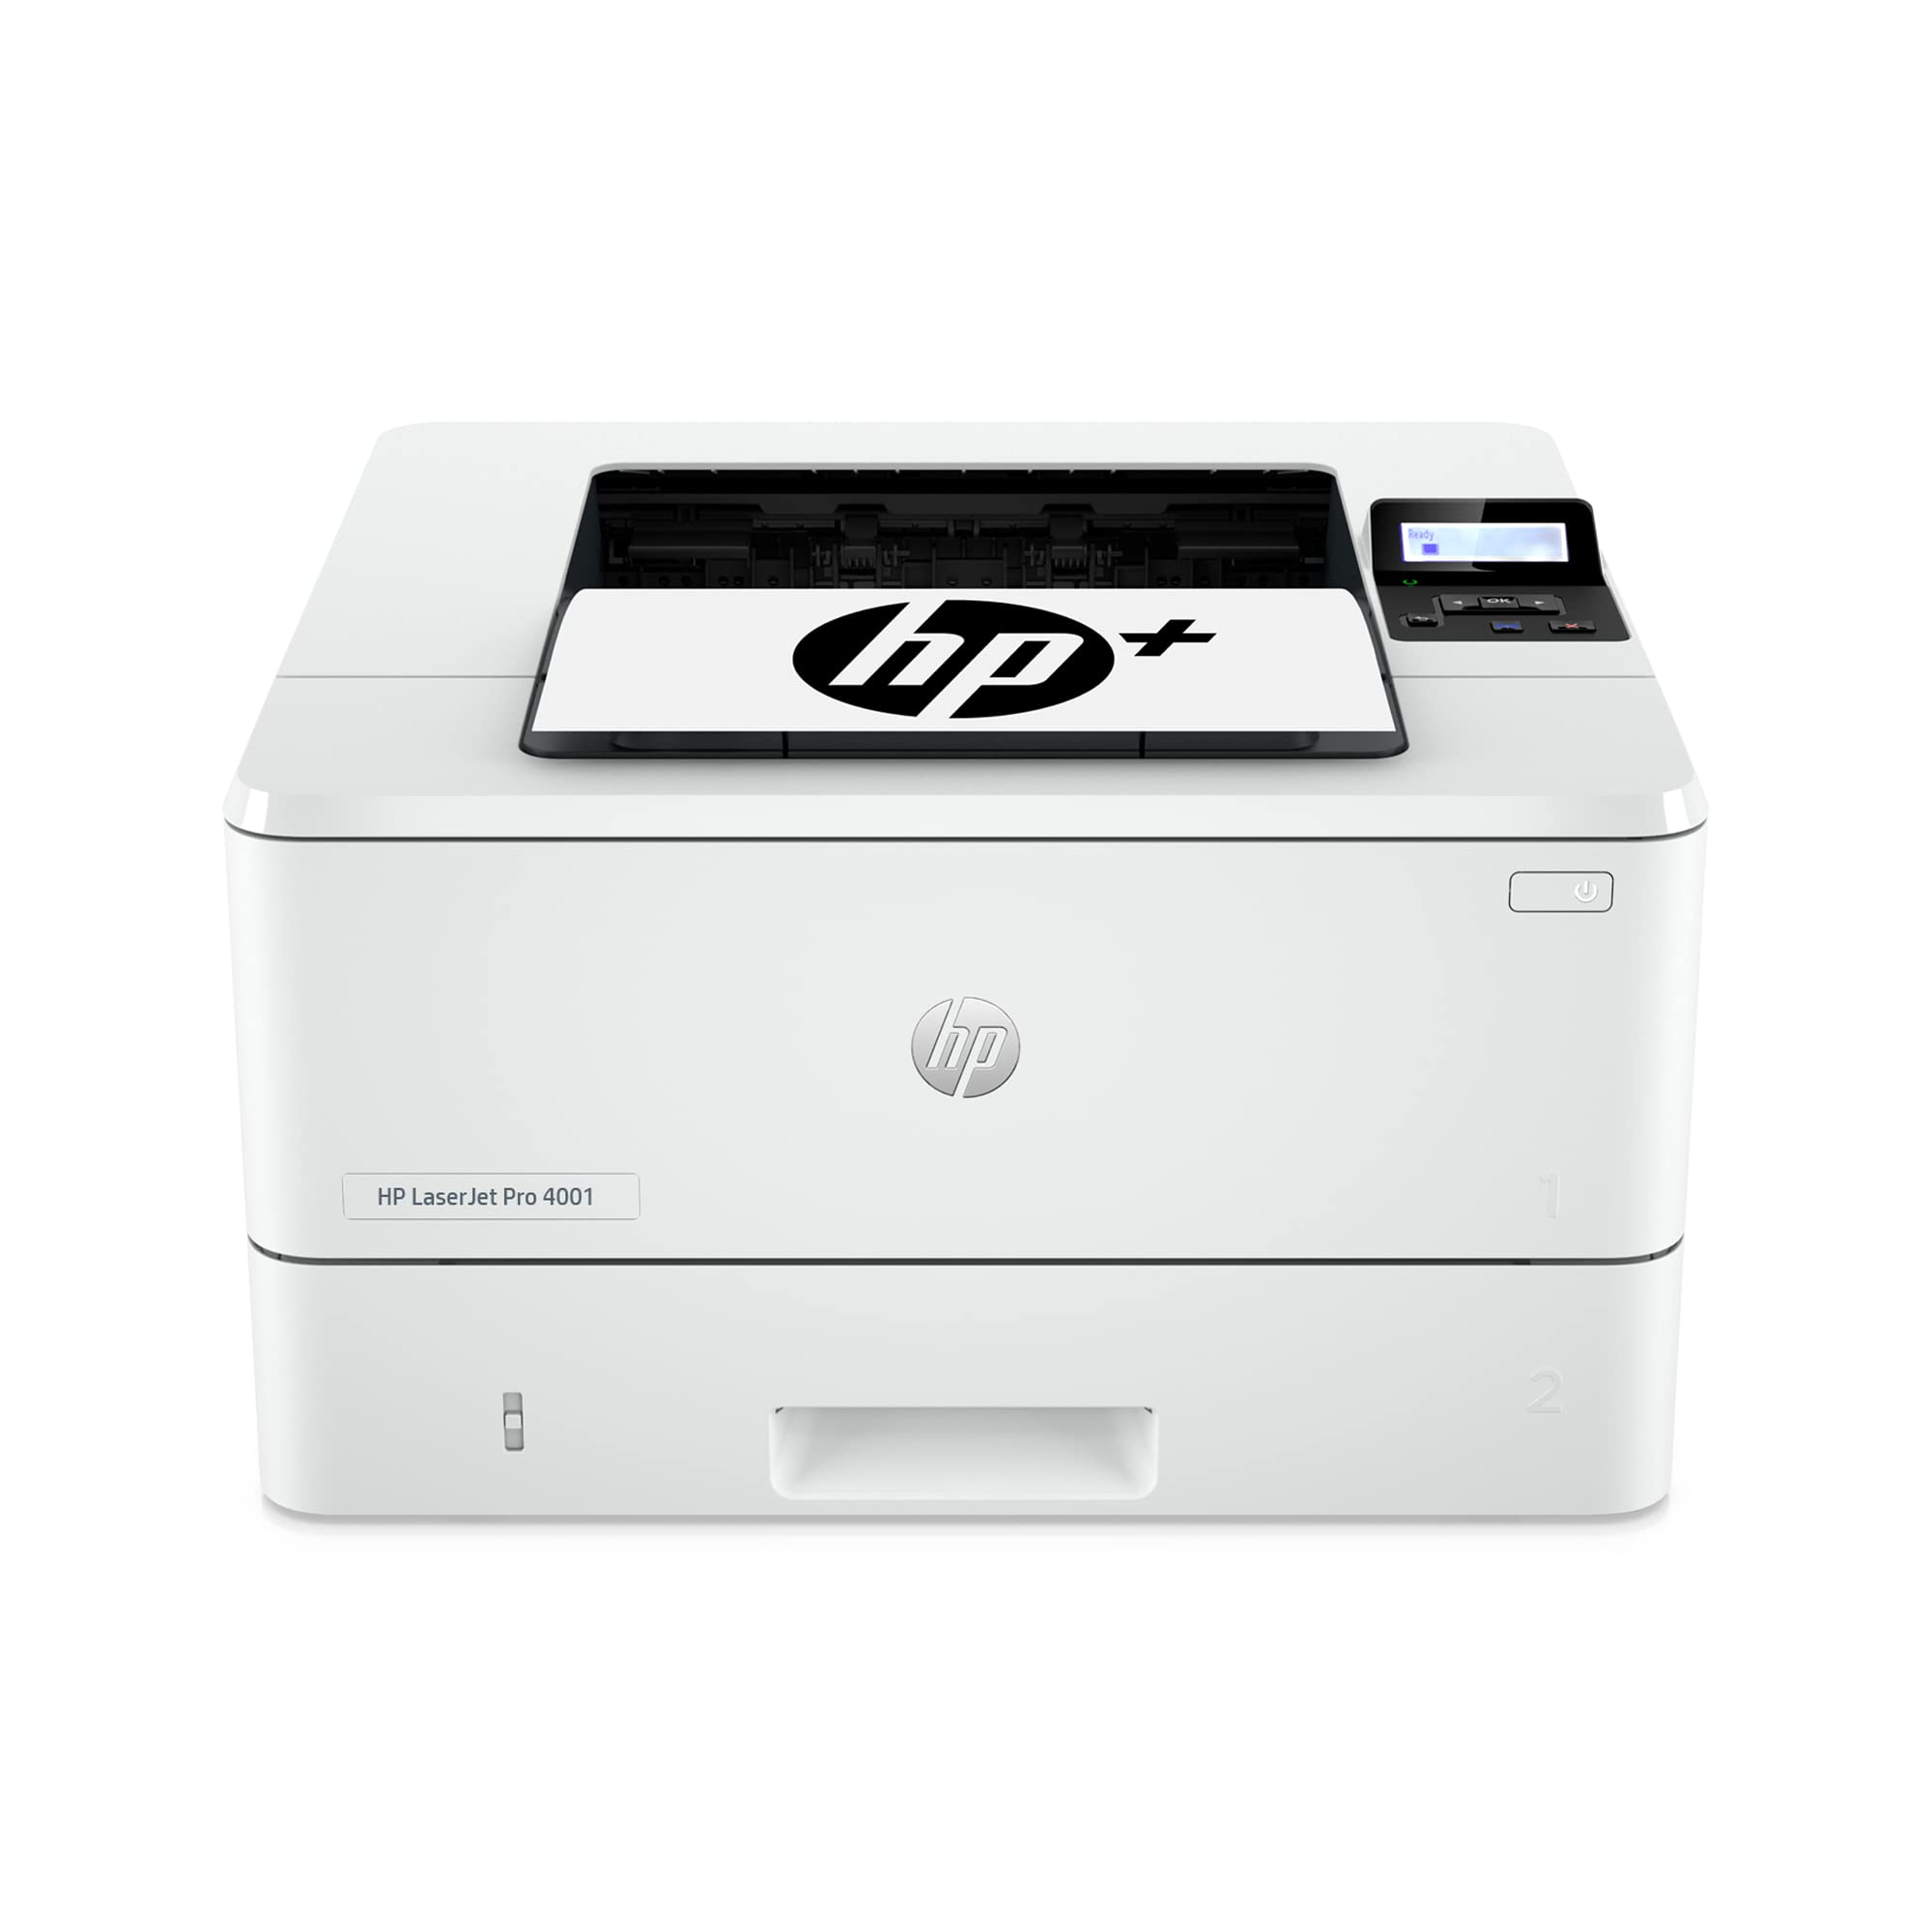 HP طابعة LaserJet Pro 4001dwe اللاسلكية بالأبيض والأسود مع + ميزات المكتب الذكي